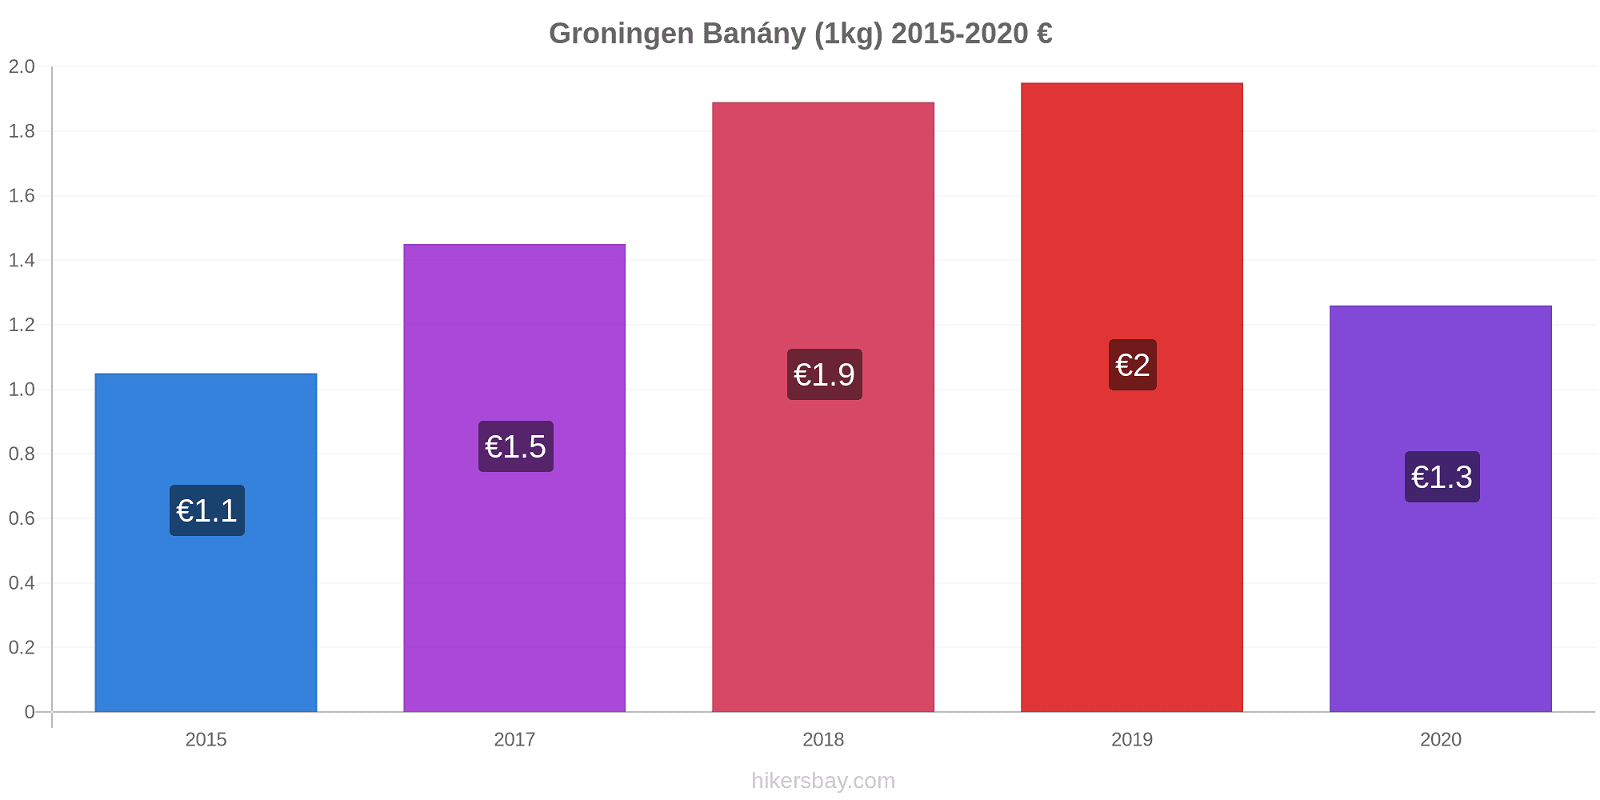 Groningen změny cen Banány (1kg) hikersbay.com